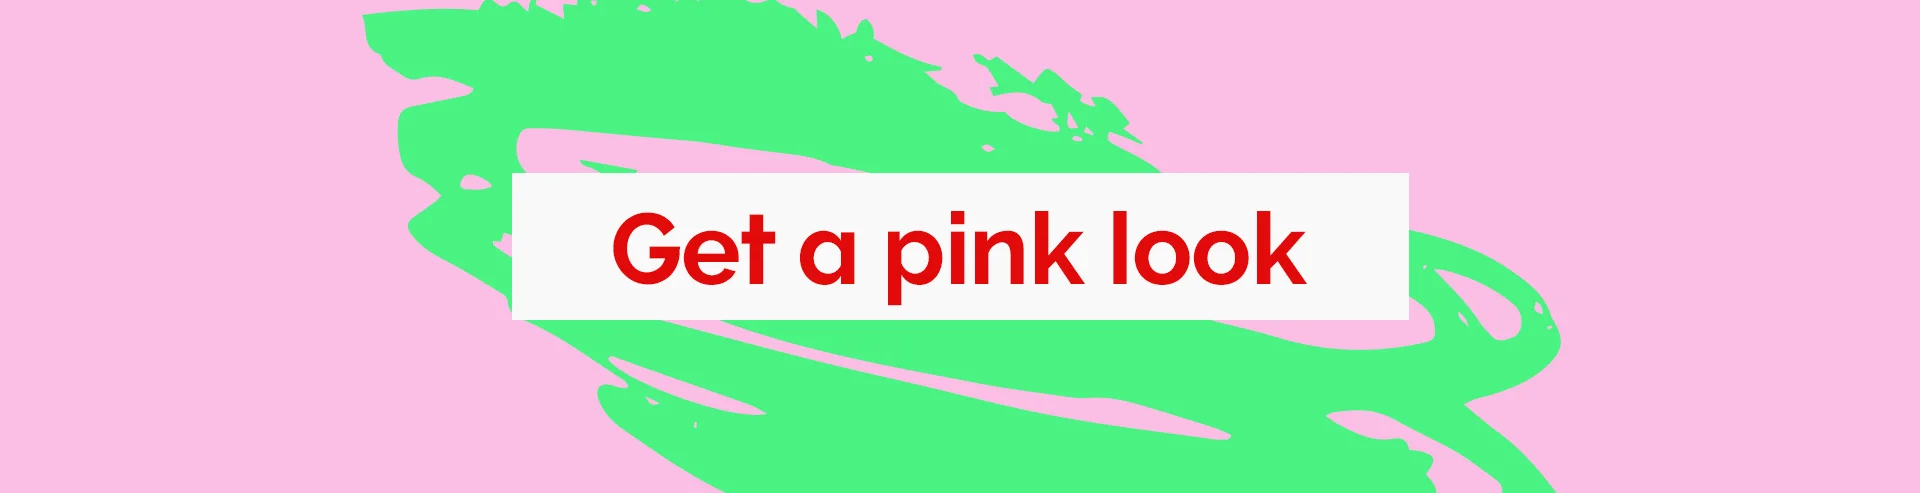 Full-Width-Gift-Idea-Get-a-Pink-Look-Desktop.webp